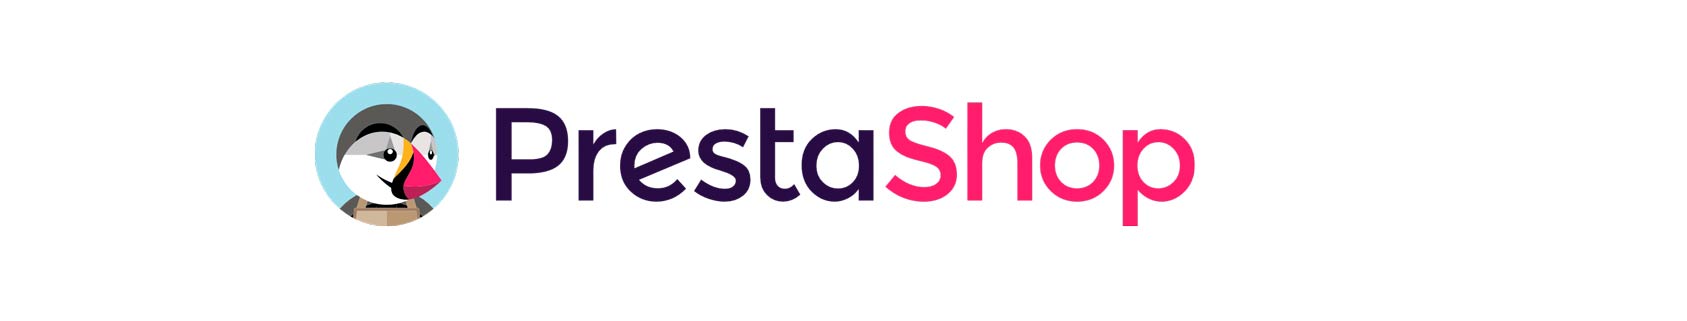 PrestaShop vs Spree Commerce: duelo de tiendas online